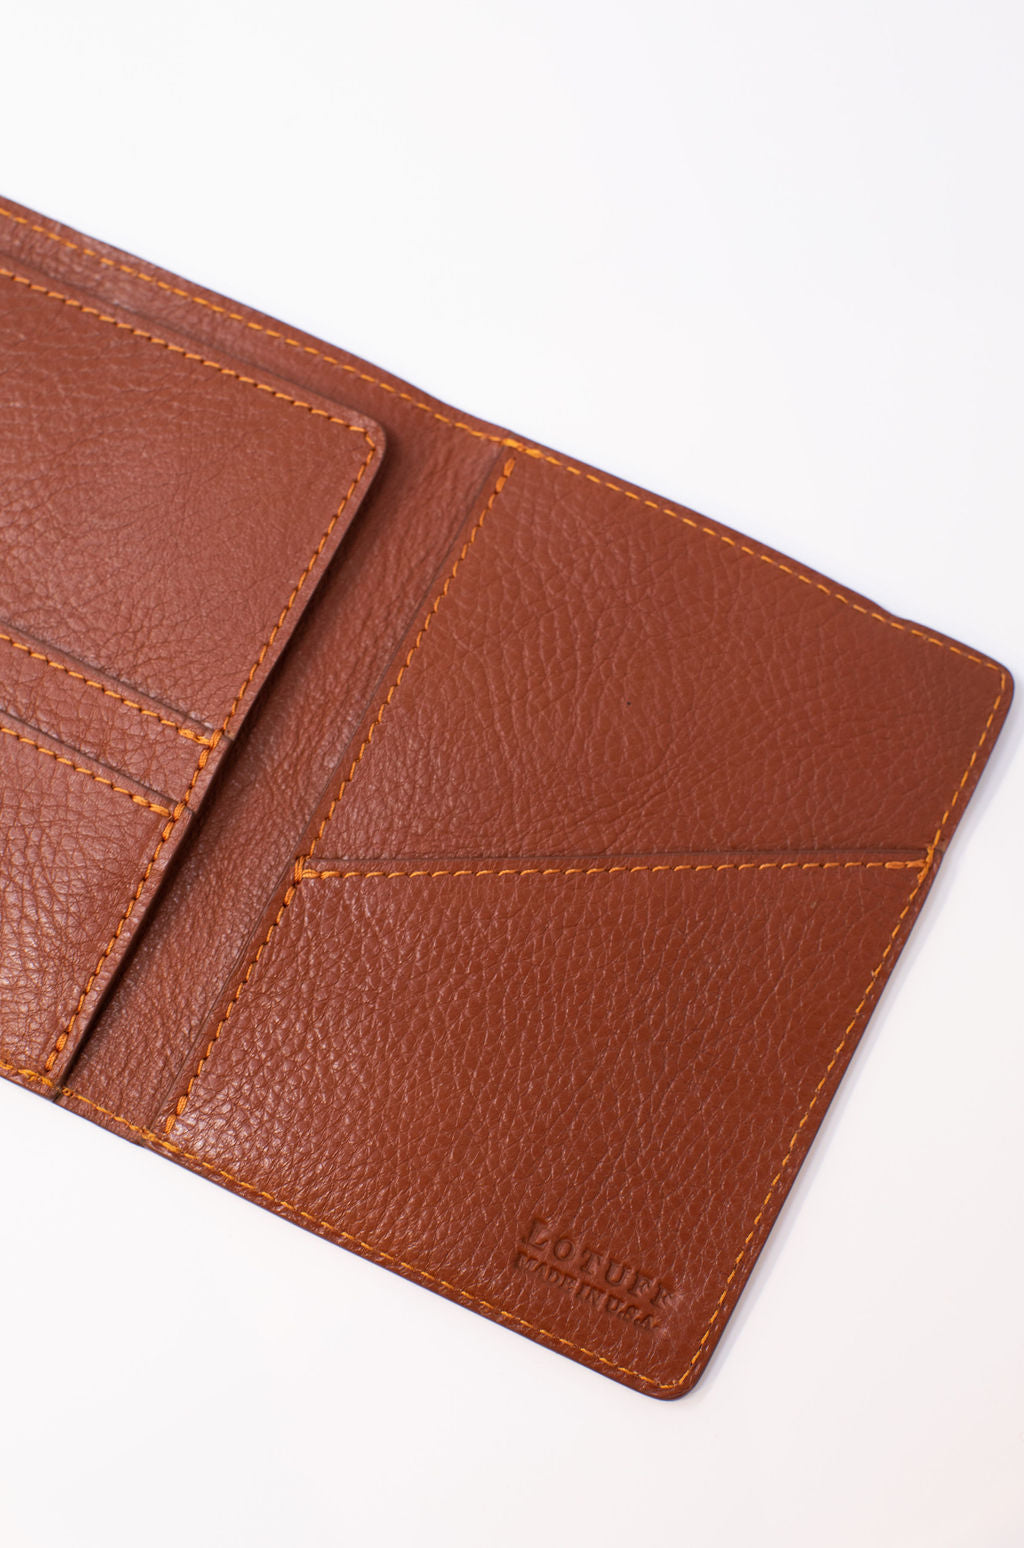 Lotuff-Leather-Passport-Wallet-Saddle